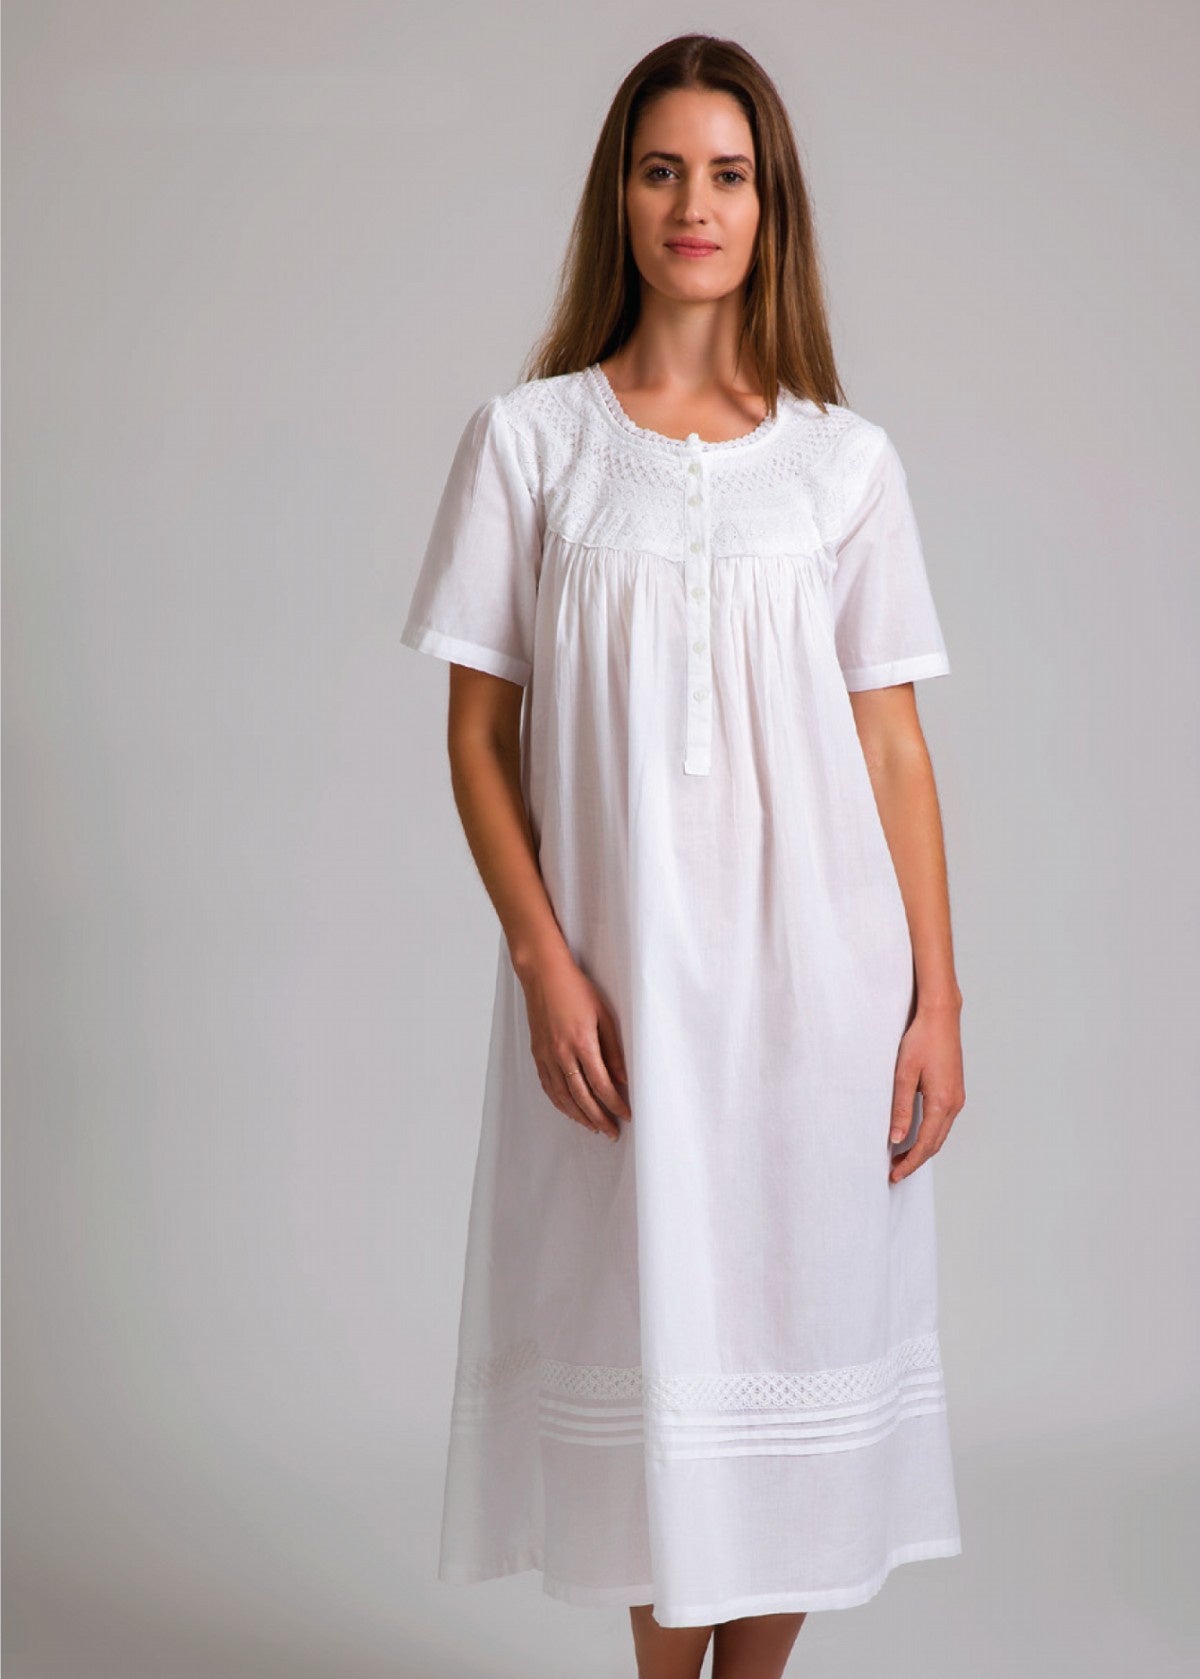 Arabella 100% Cotton Night Dress Short Sleeve